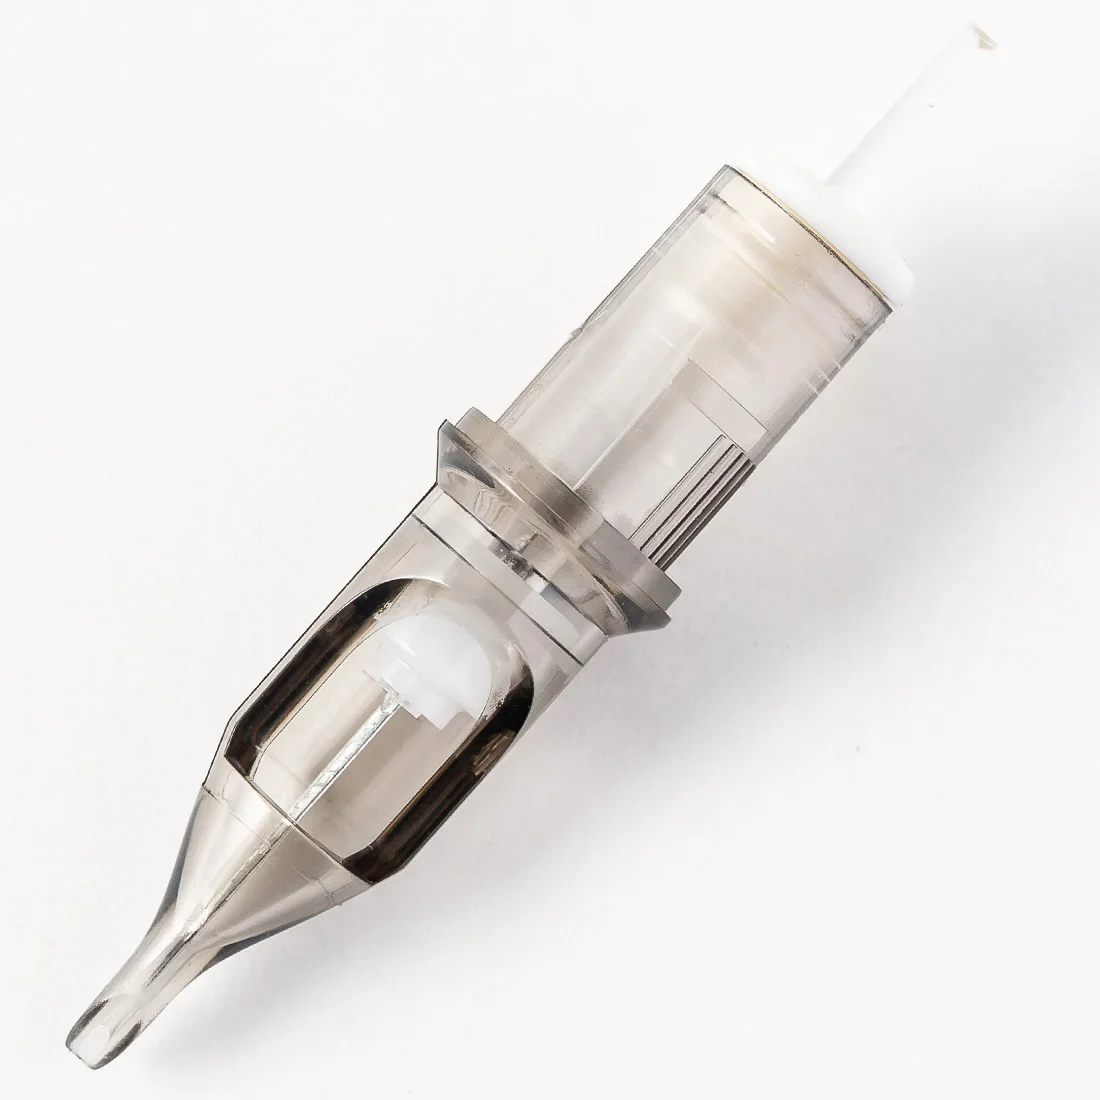 Ez revolution Tattoo Nadel patrone #08 Bugpin (0,25mm) Round Liner (rl) für Permanent Make-up Rotary Pen Maschinen